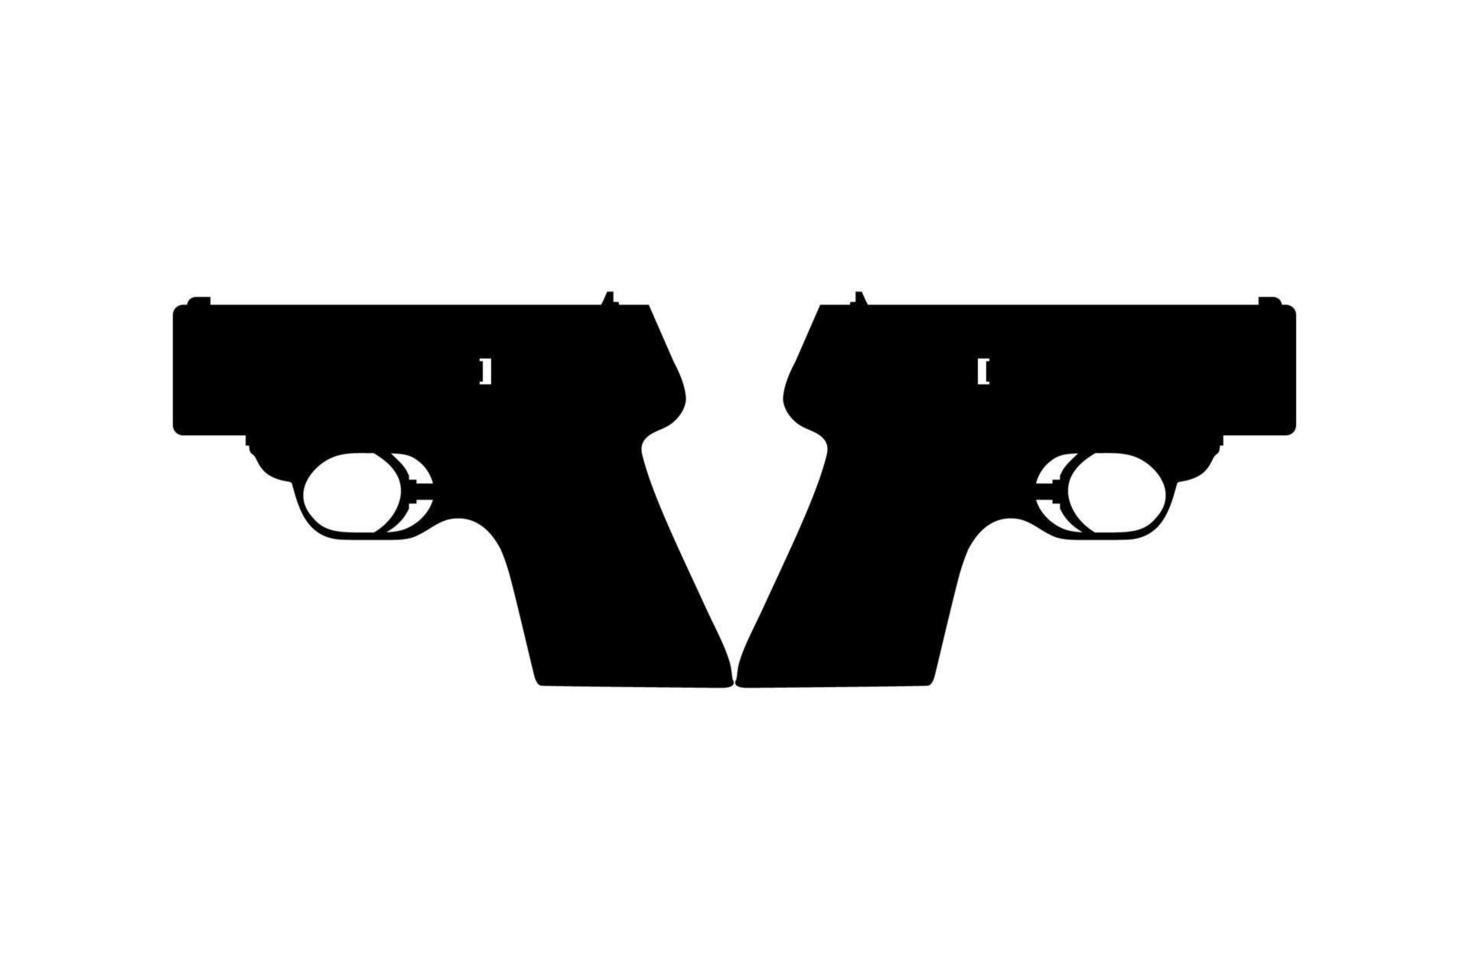 Silhouettenpistole oder Pistolenpistole für Kunstillustration, Logo, Piktogramm, Website oder Grafikdesignelement. Vektor-Illustration vektor